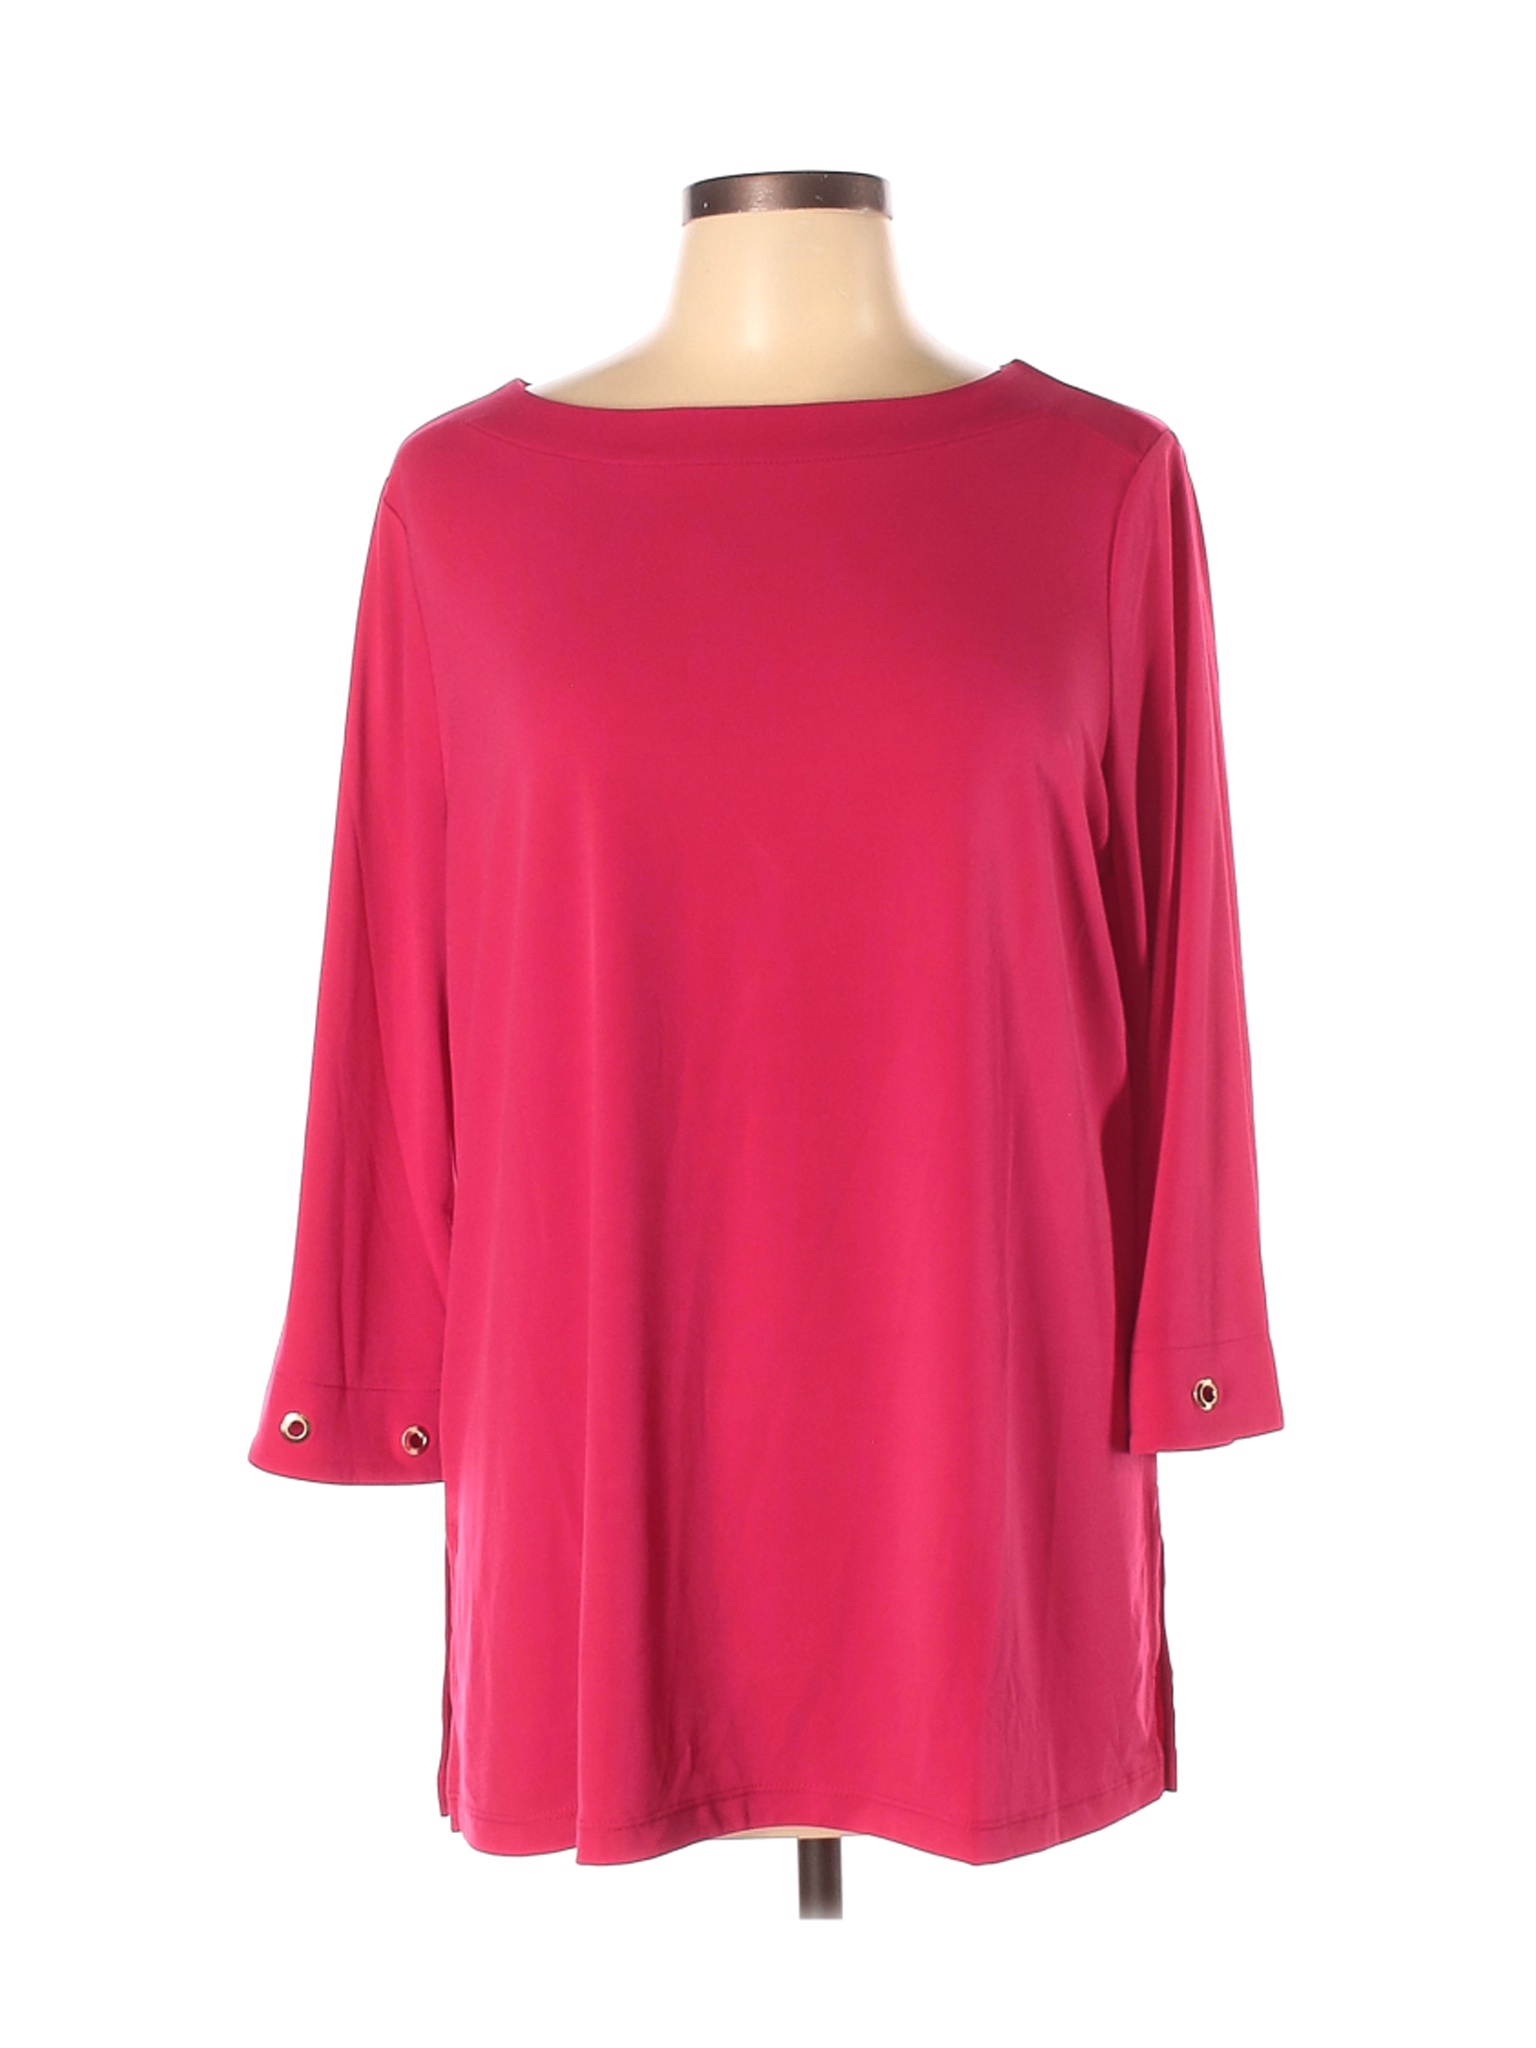 Susan Graver Women Pink 3/4 Sleeve Top L | eBay